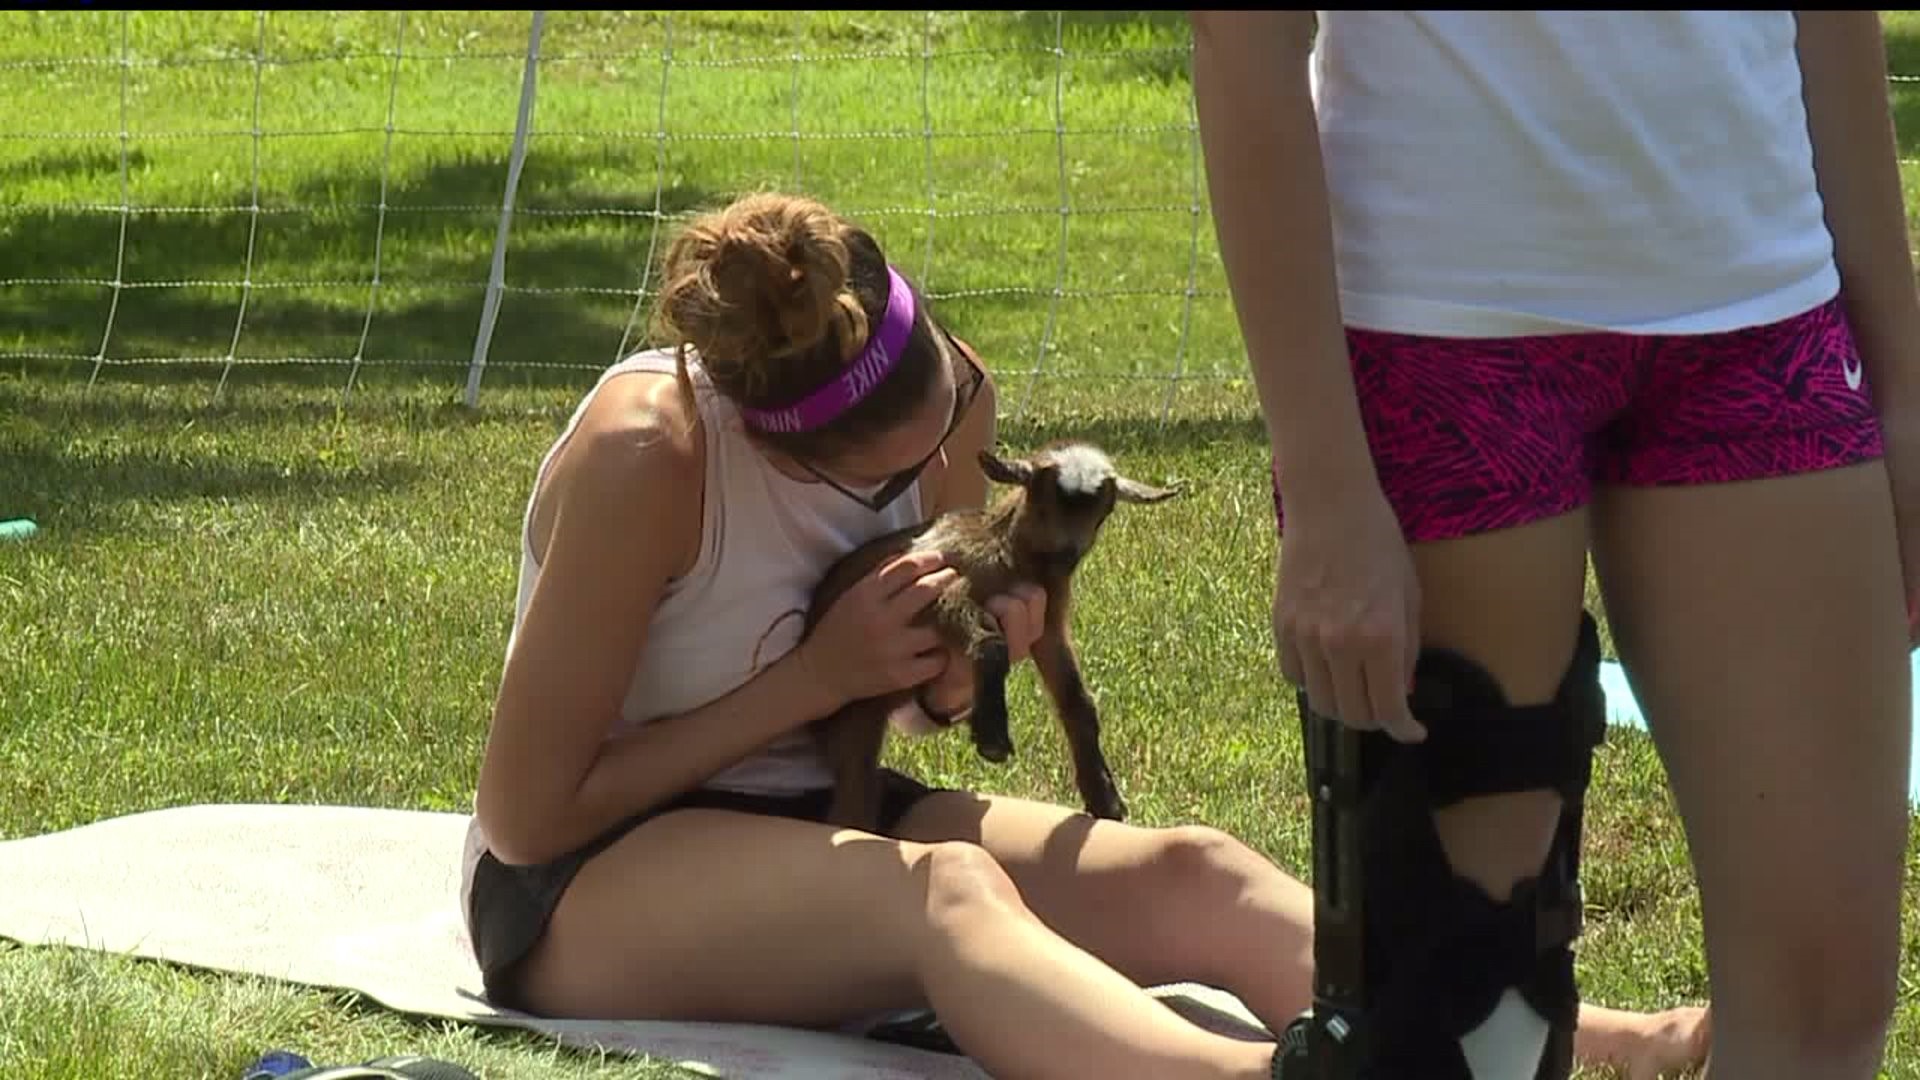 Goats take over Adams County yoga class